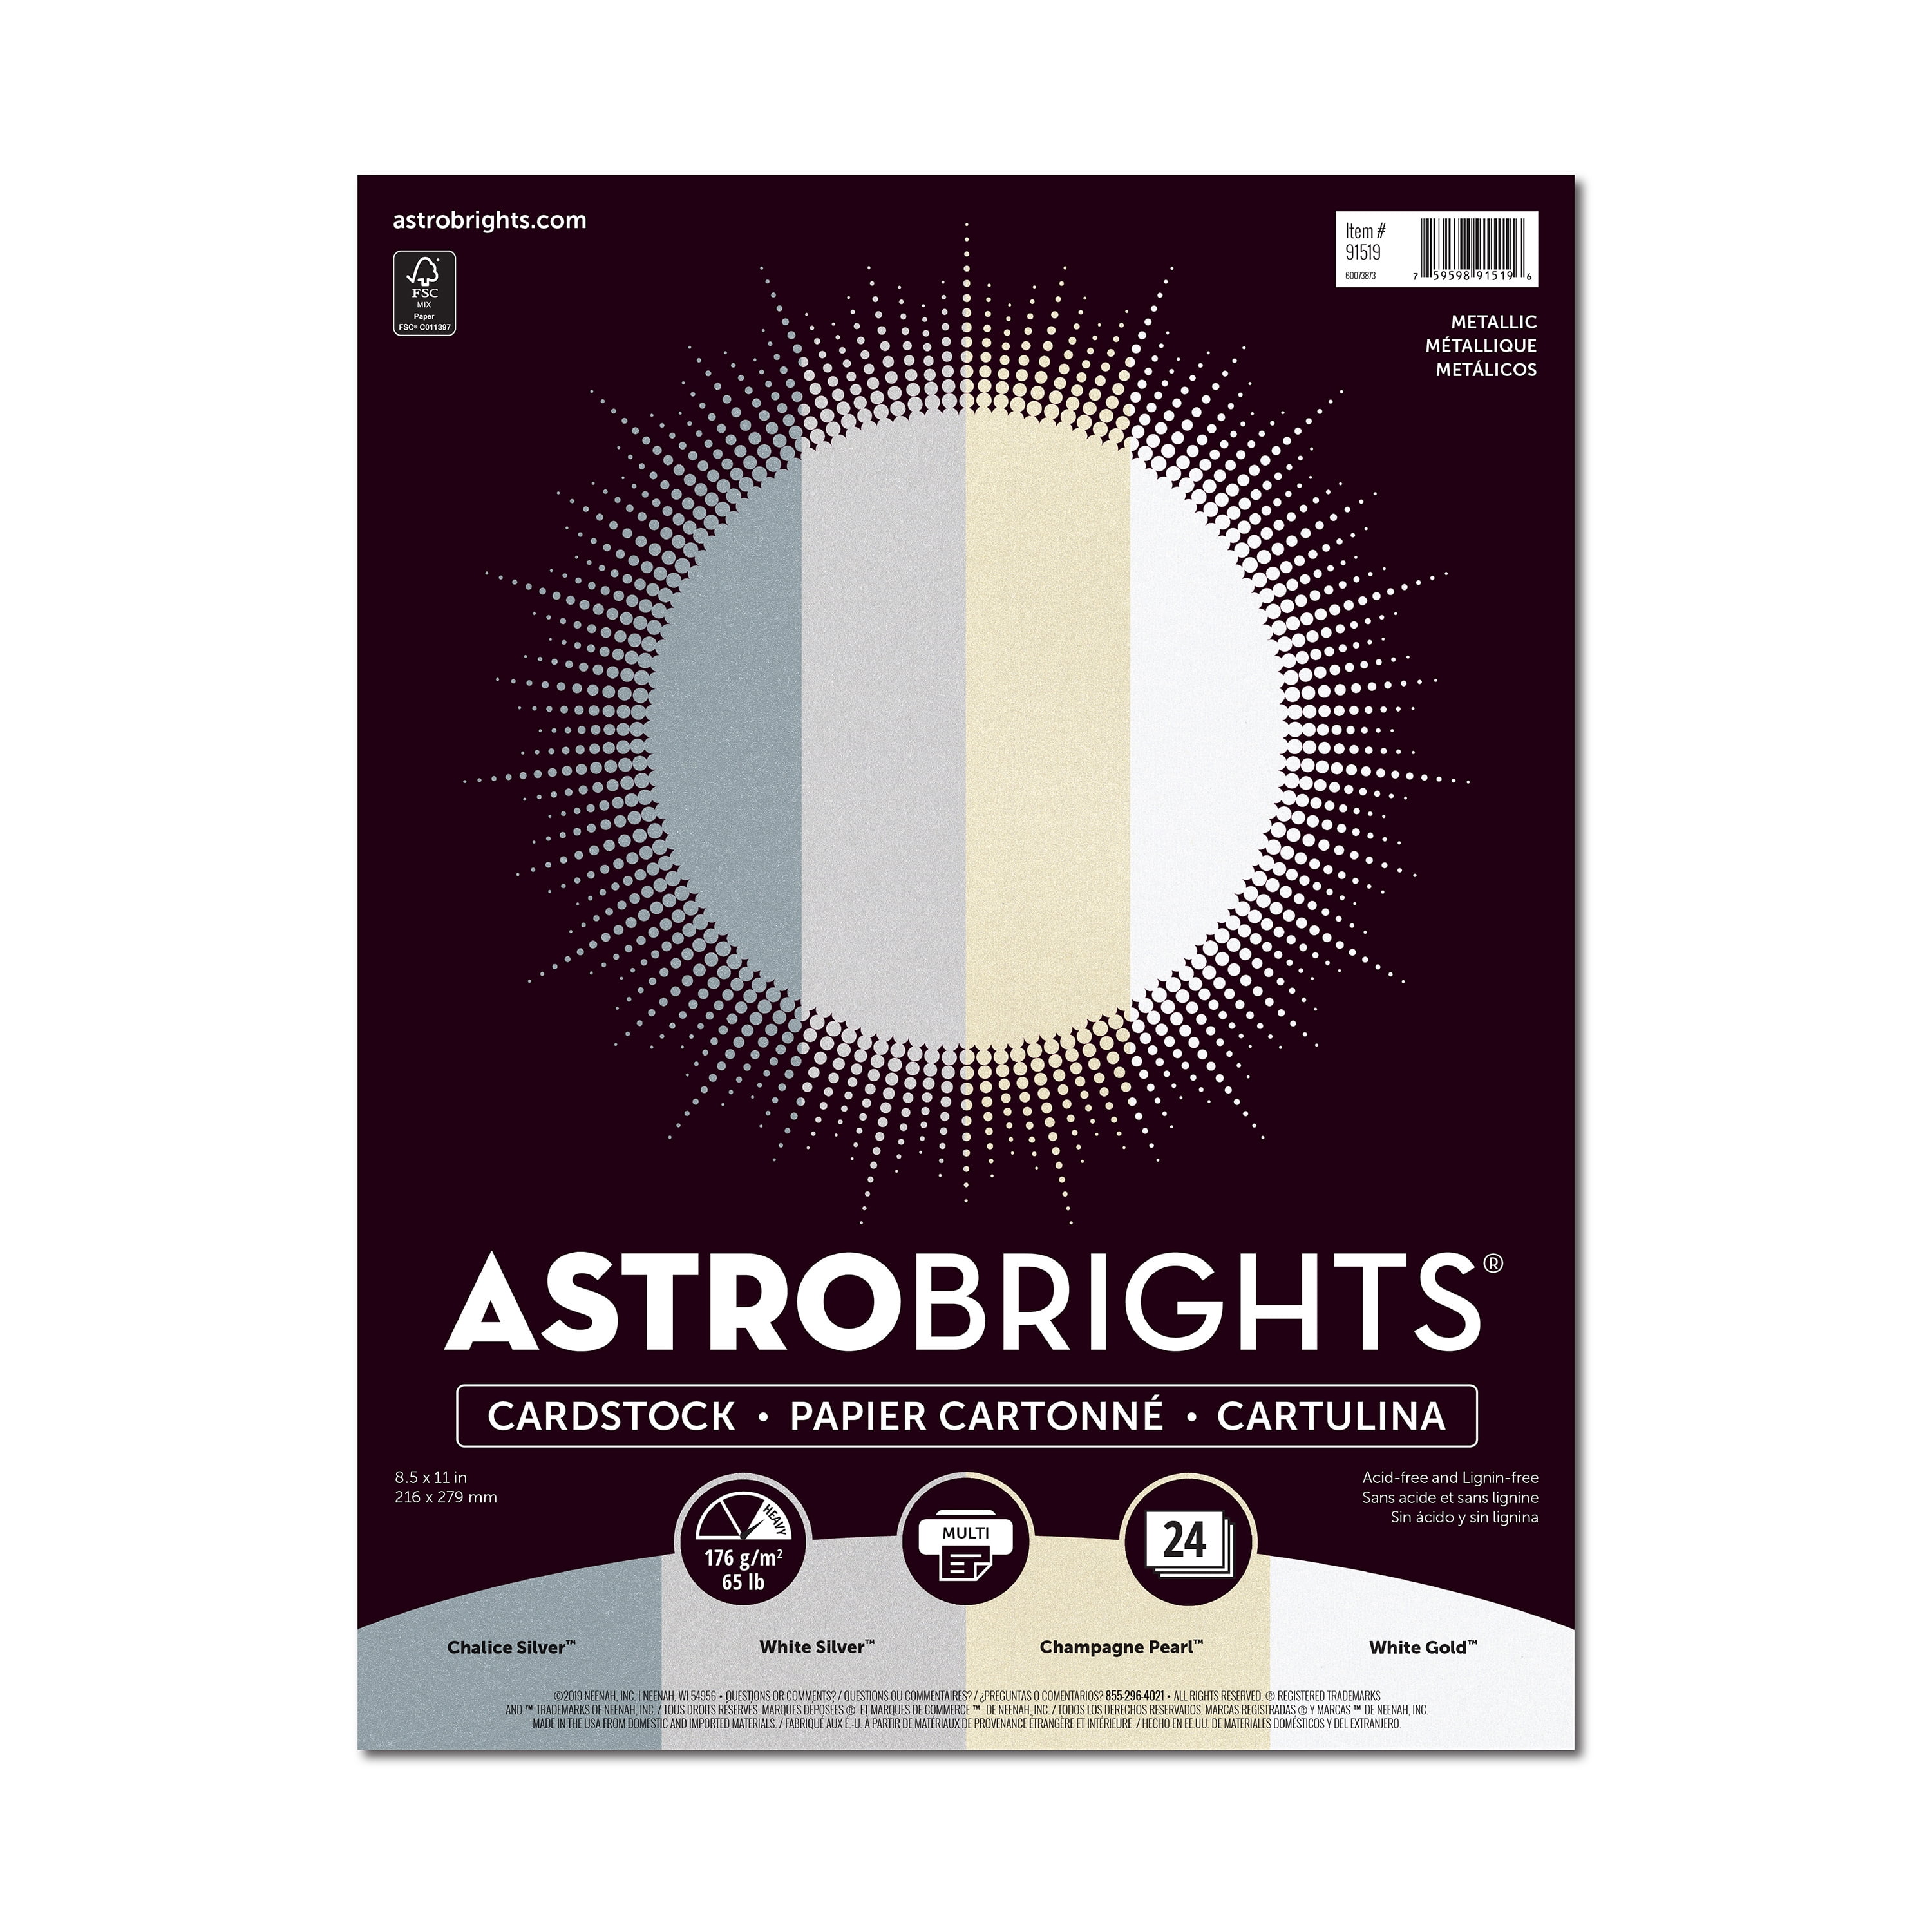 Astrobrights Metallic Cardstock, 4-Color Assortment, 24 Sheets